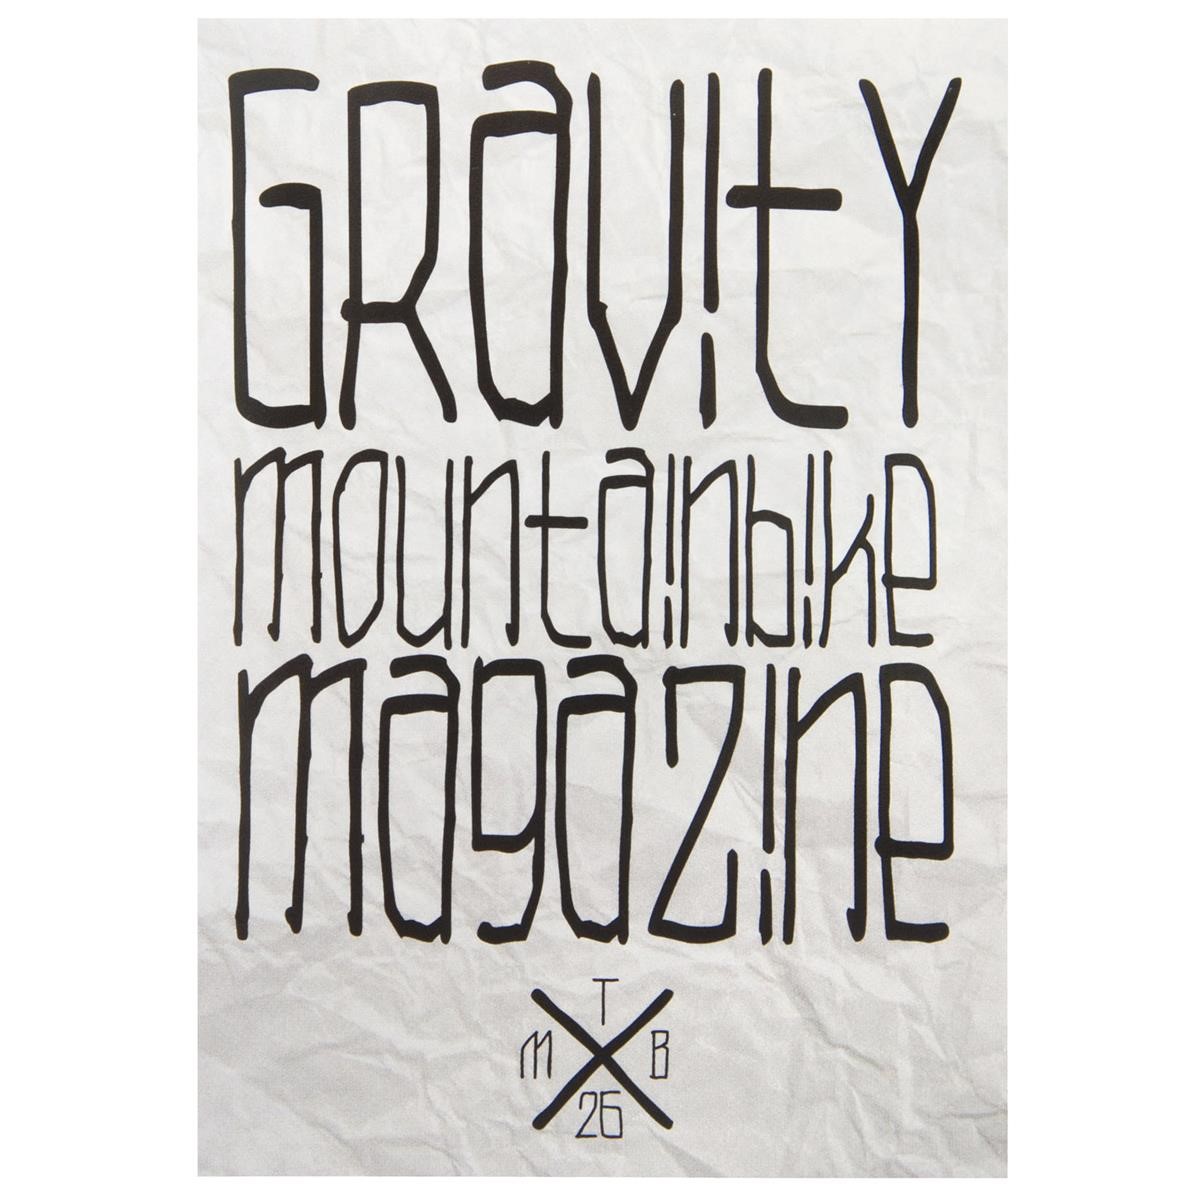 Gravity Mountainbike Magazine Adesivi  MTB 26, 10.4 cm